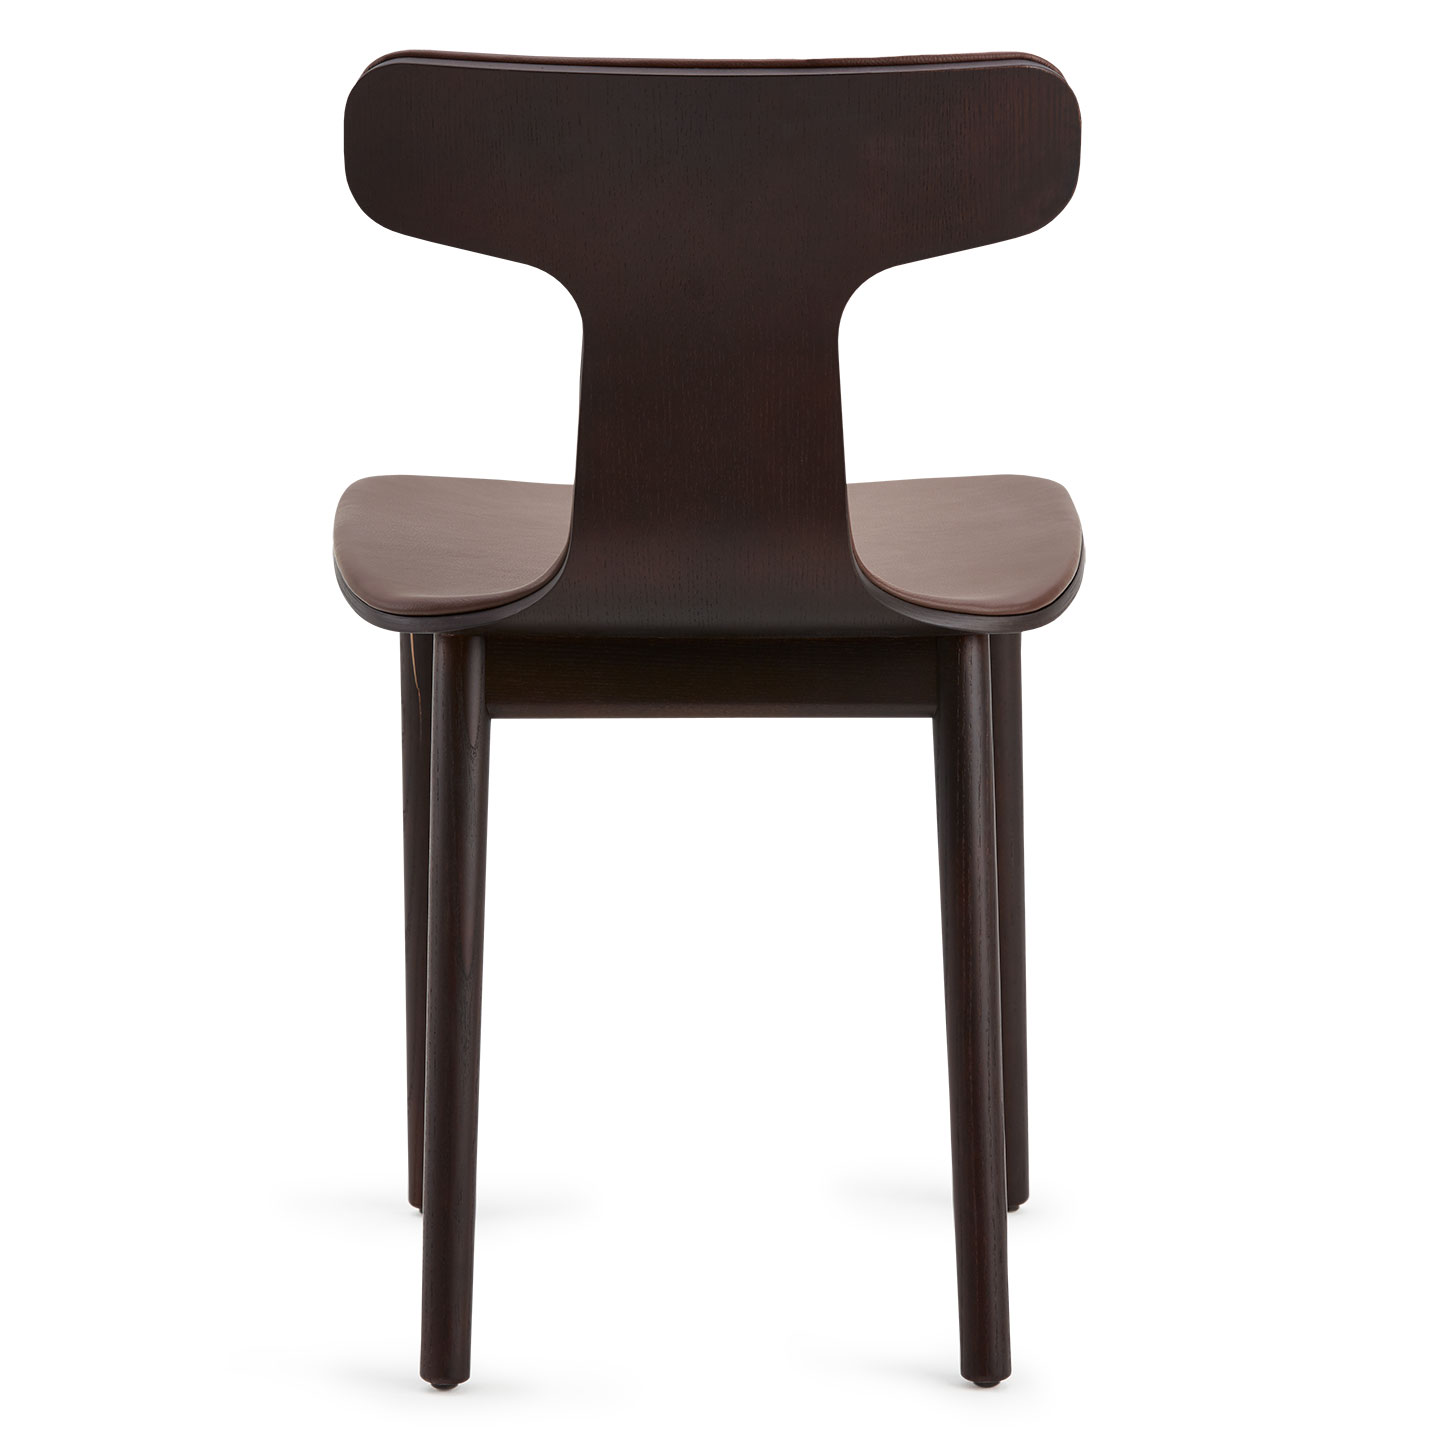 Haworth Bac One chair in dark brown back angle